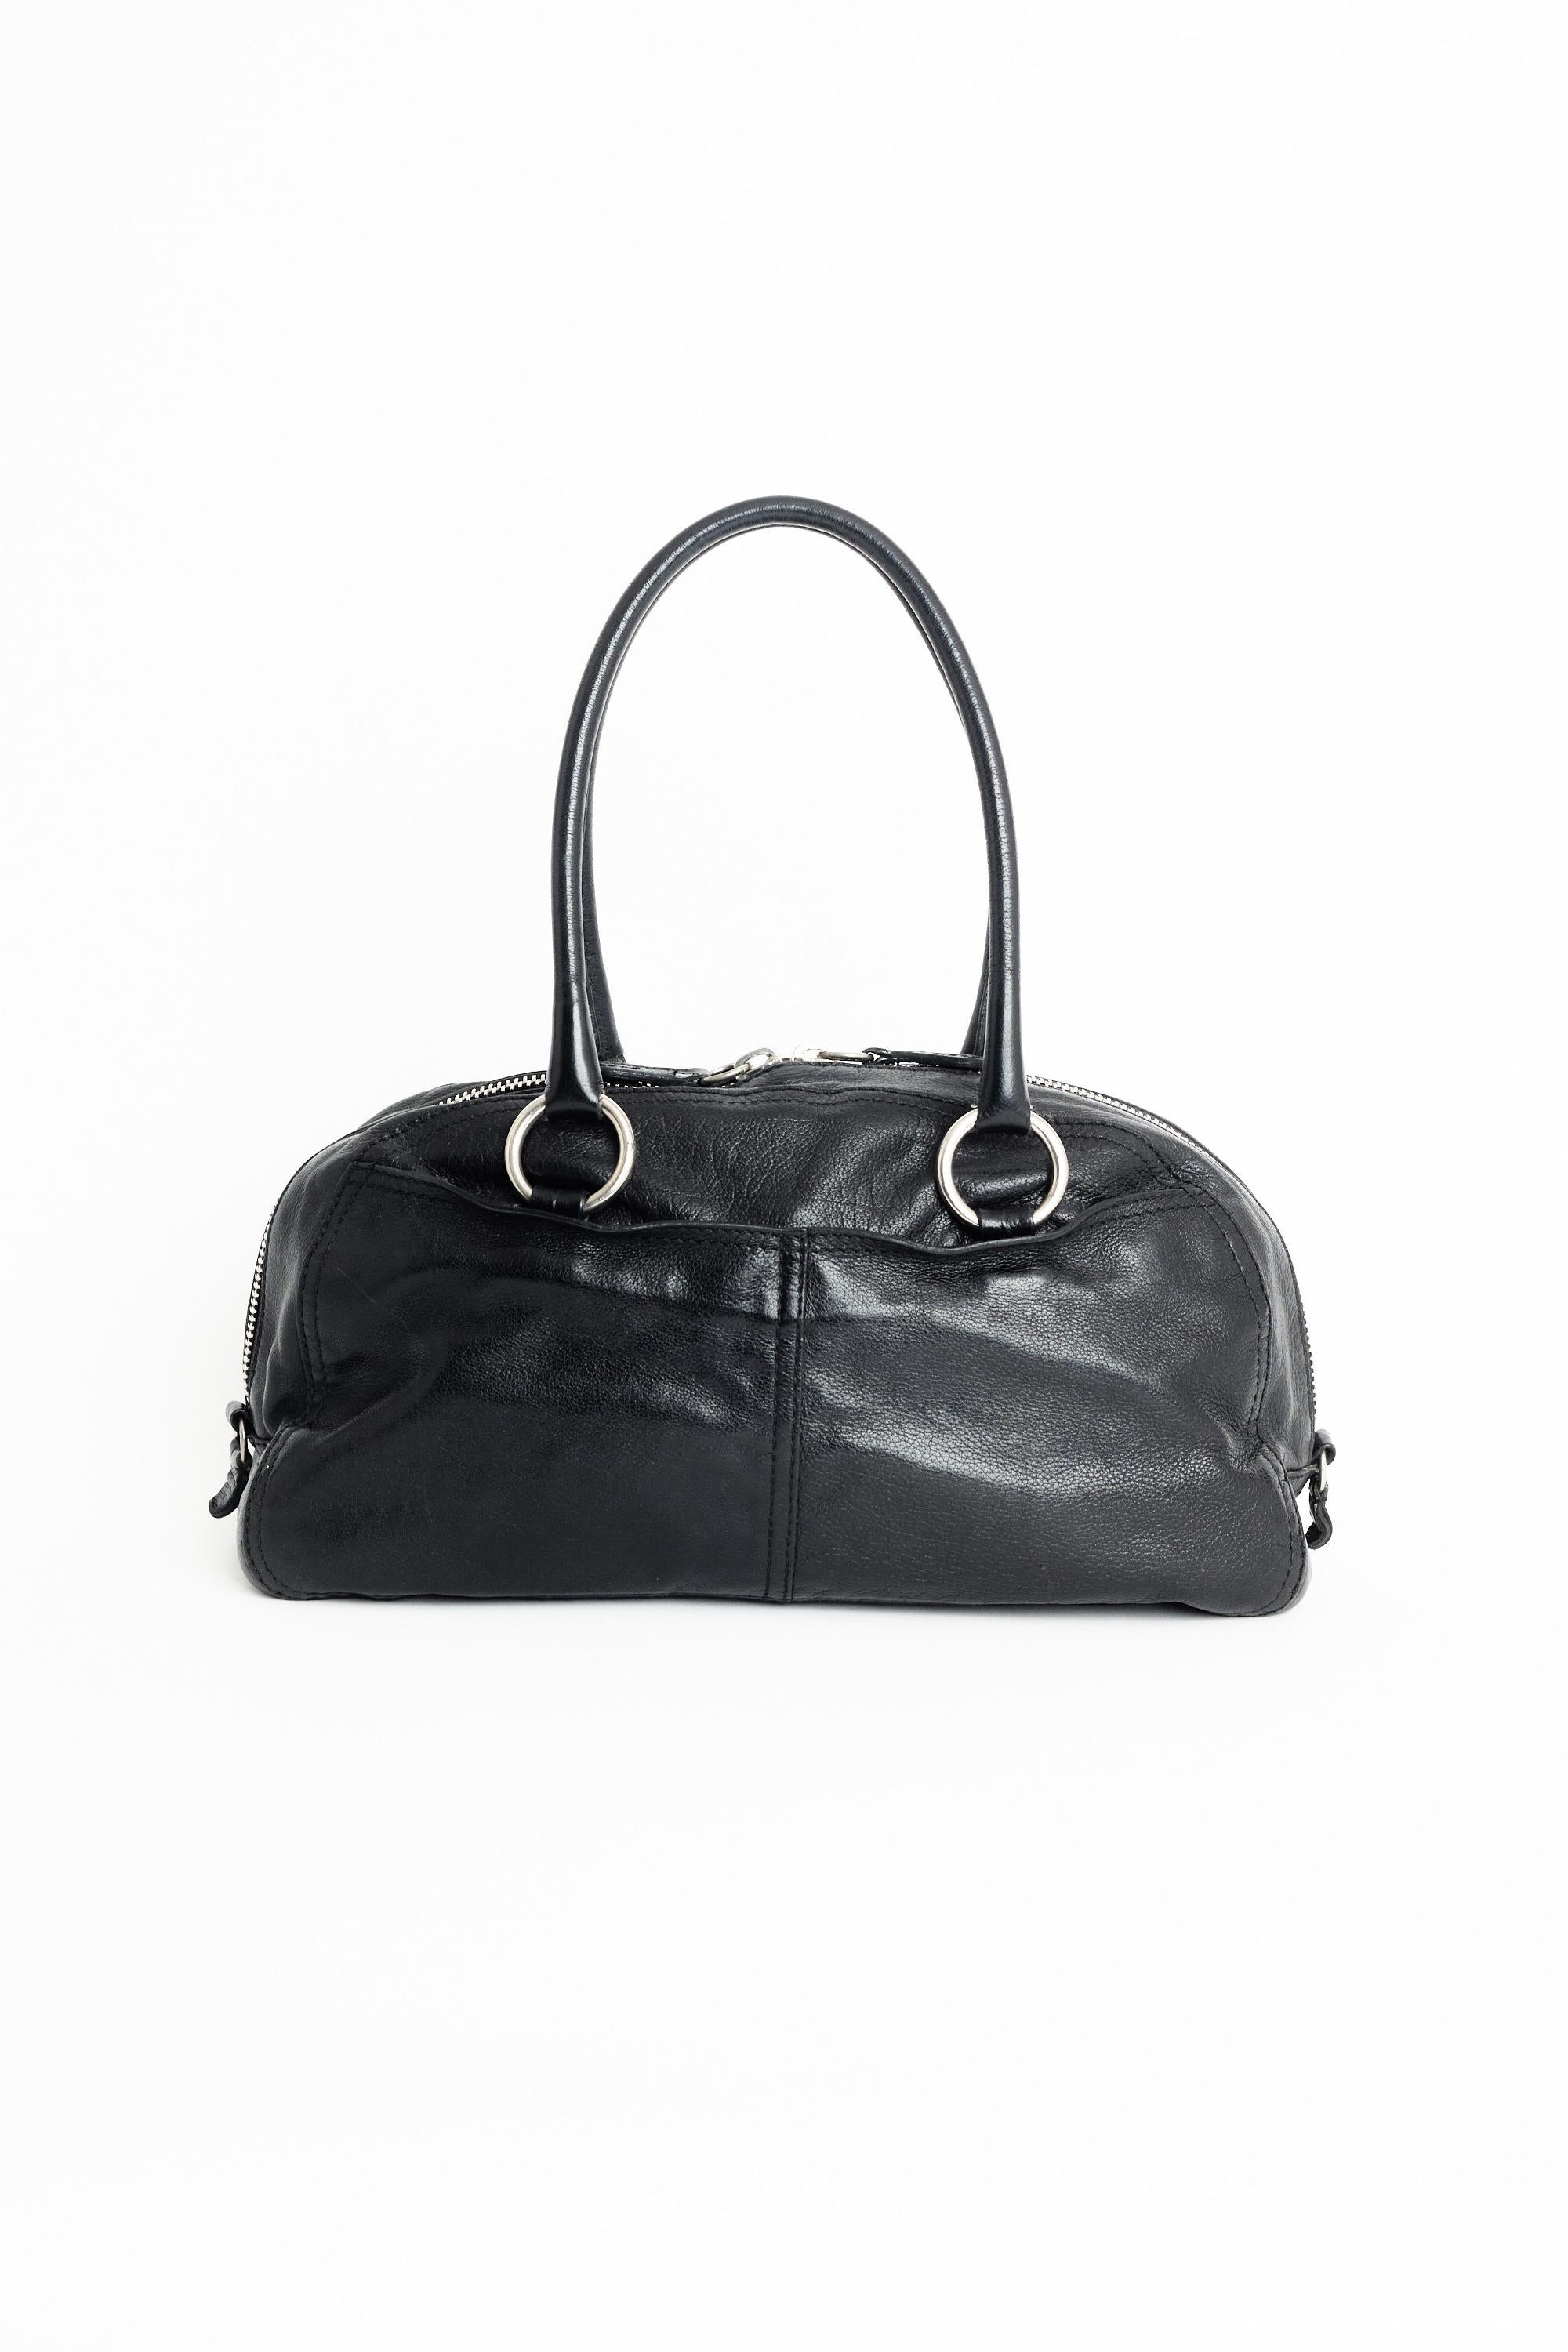 Women's or Men's Prada Vintage 1990’s Bowler Leather Bag